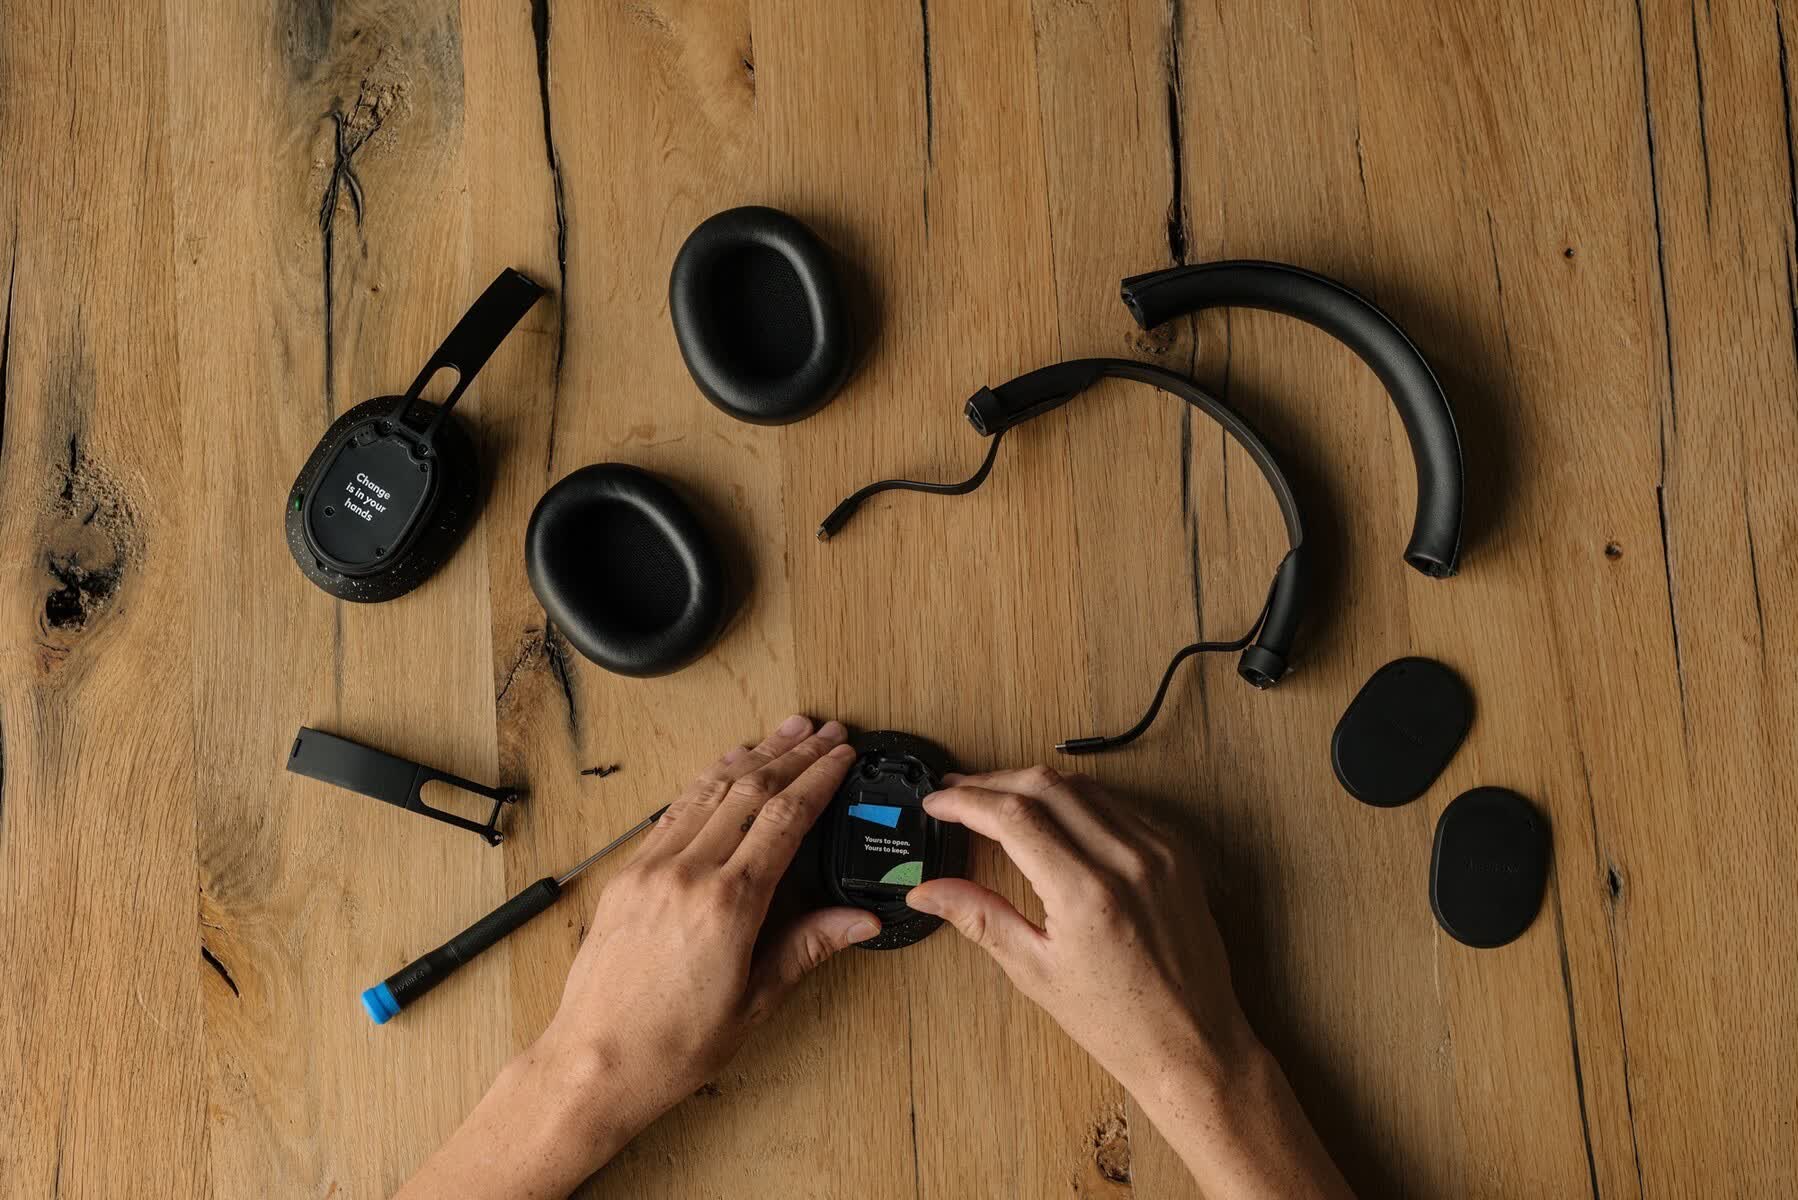 Fairphone brings its repairability smarts to headphones